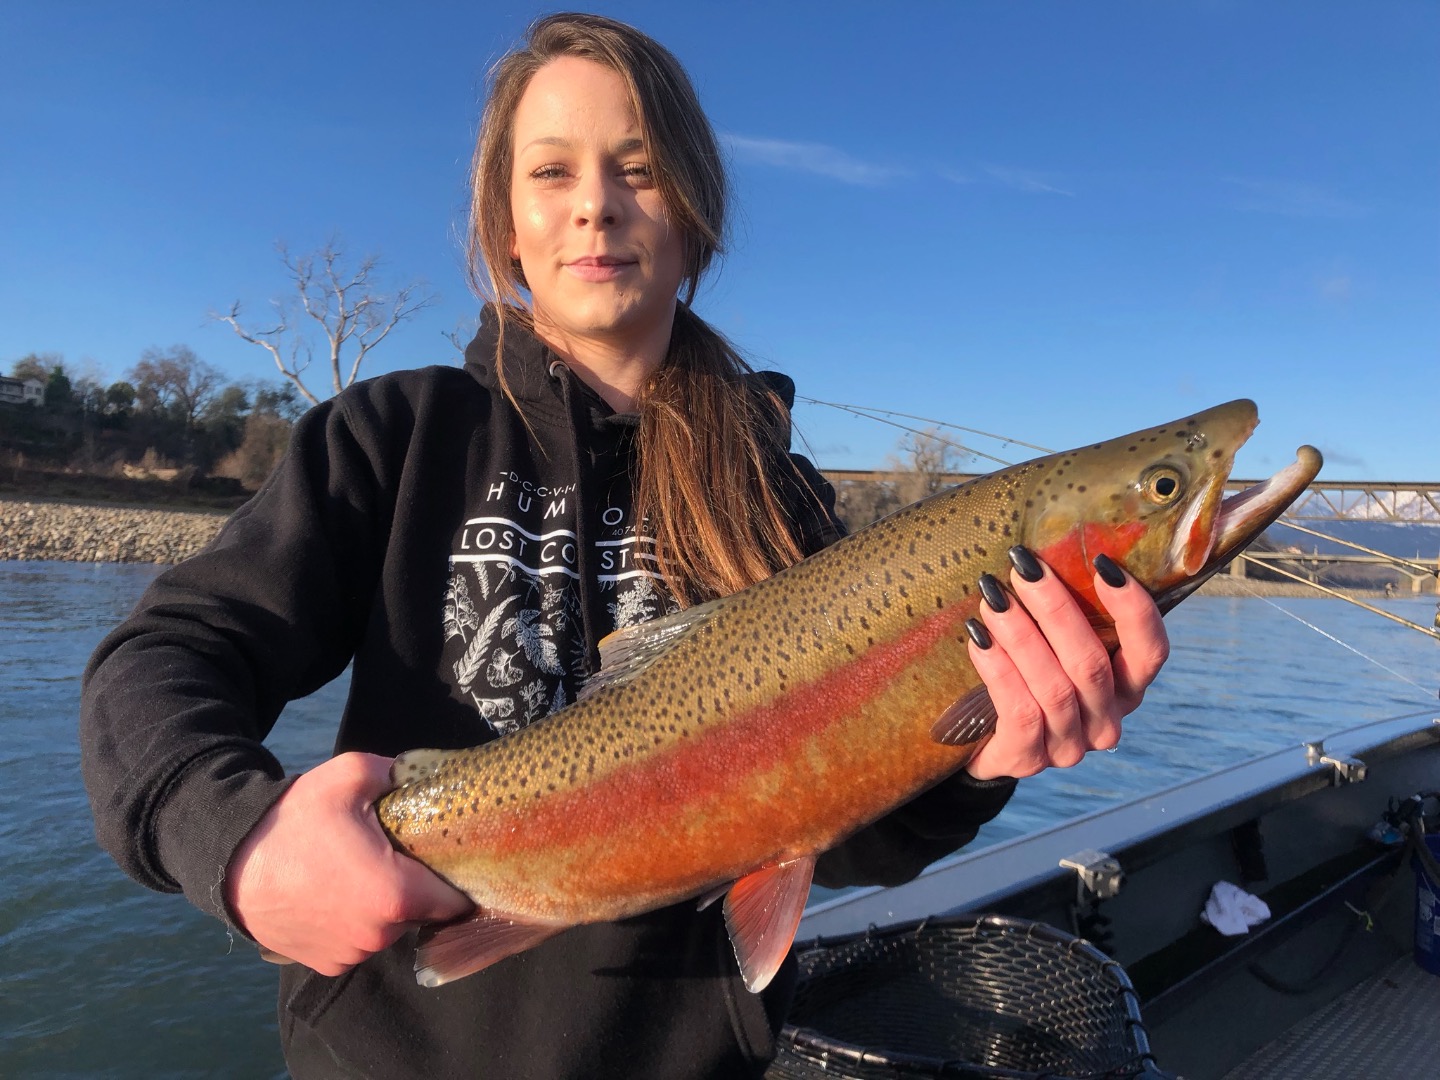 Sac River steelhead/trout fishing still going strong!